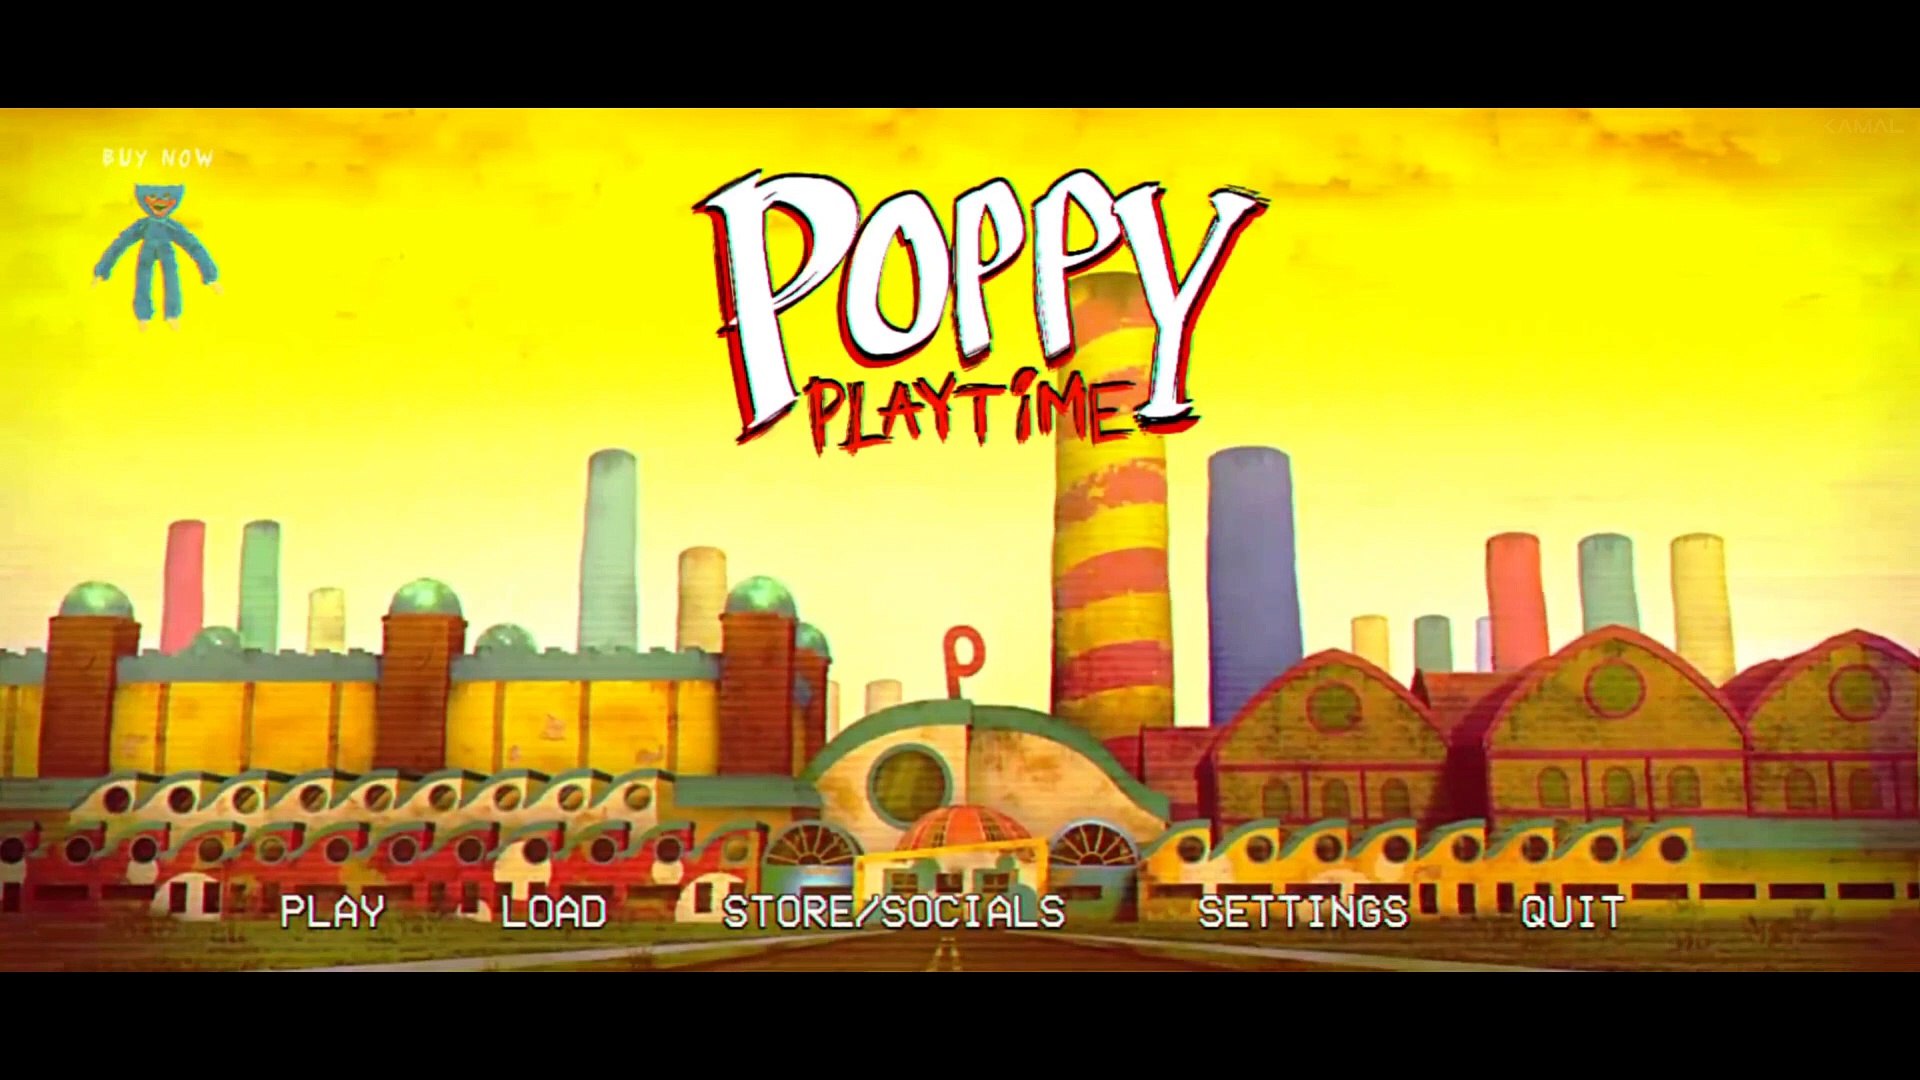 Poppy Playtime Mobile - Chapter 2 Gameplay Walkthrough (iOS